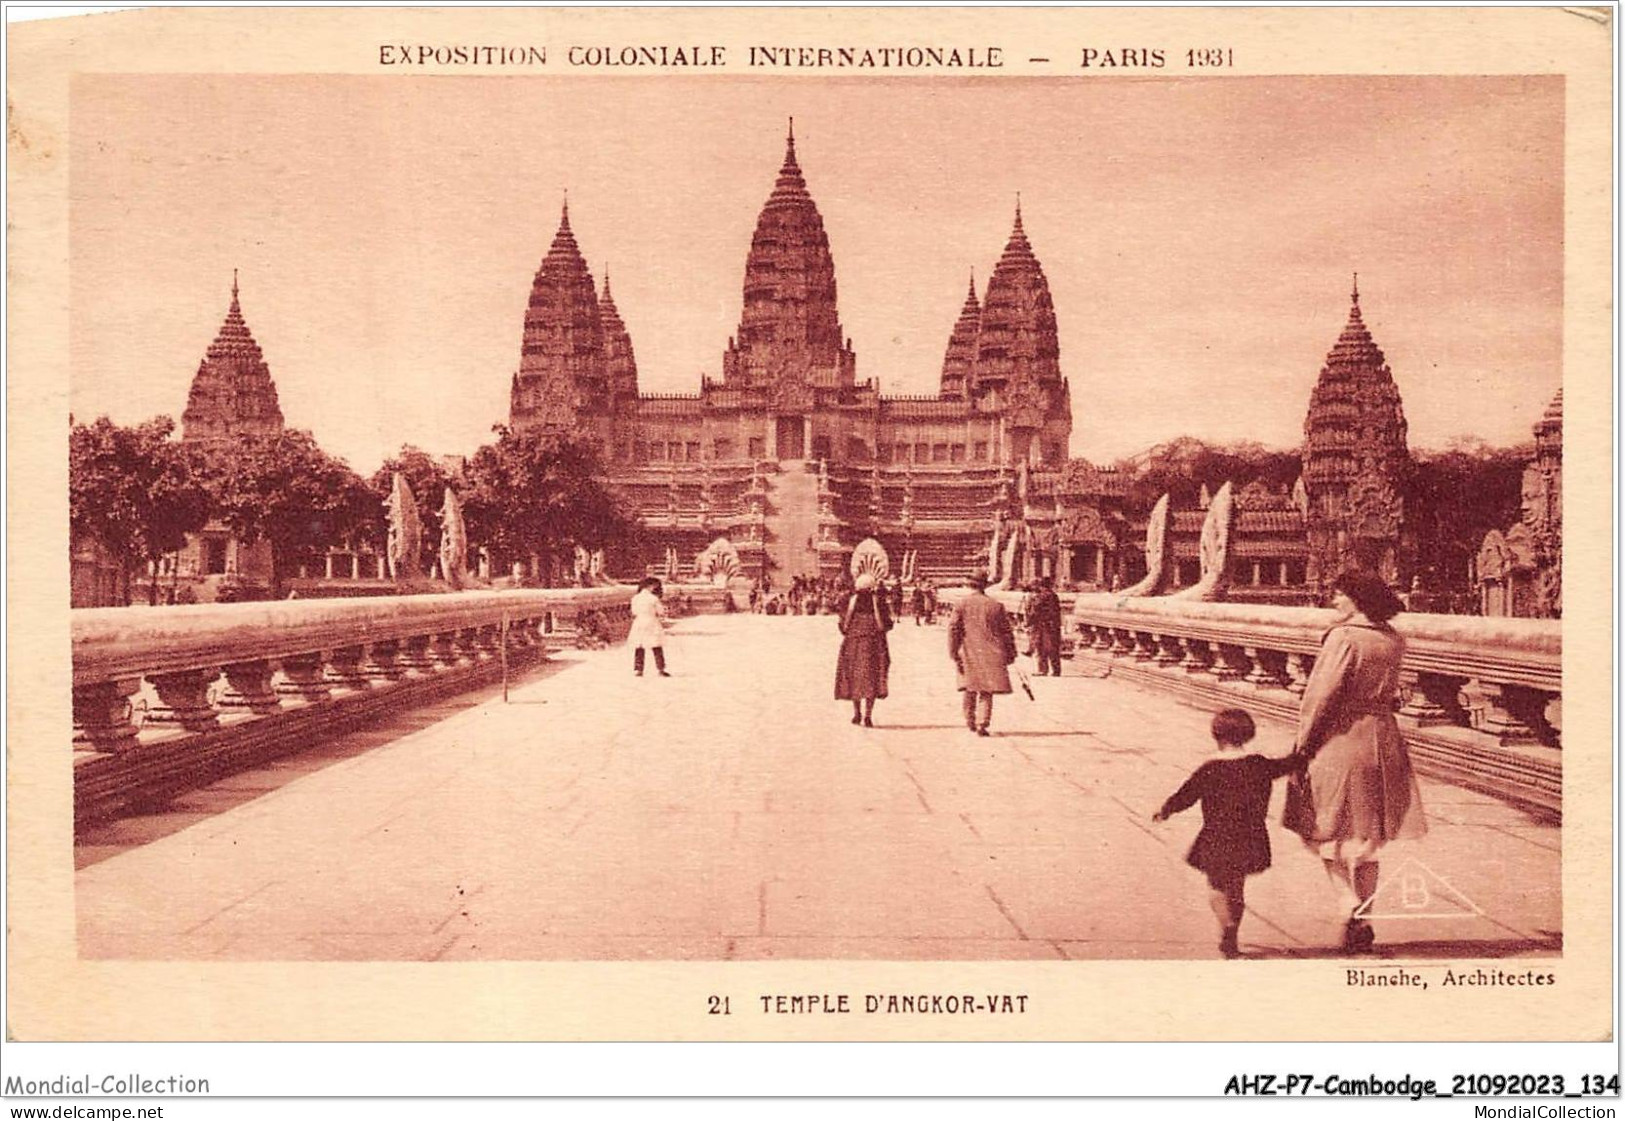 AHZP7-CAMBODGE-0663 - EXPOSITION COLONIALE INTERNATIONALE - PARIS 1931 - TEMPLE D'ANGKOR-VAT - Cambodia